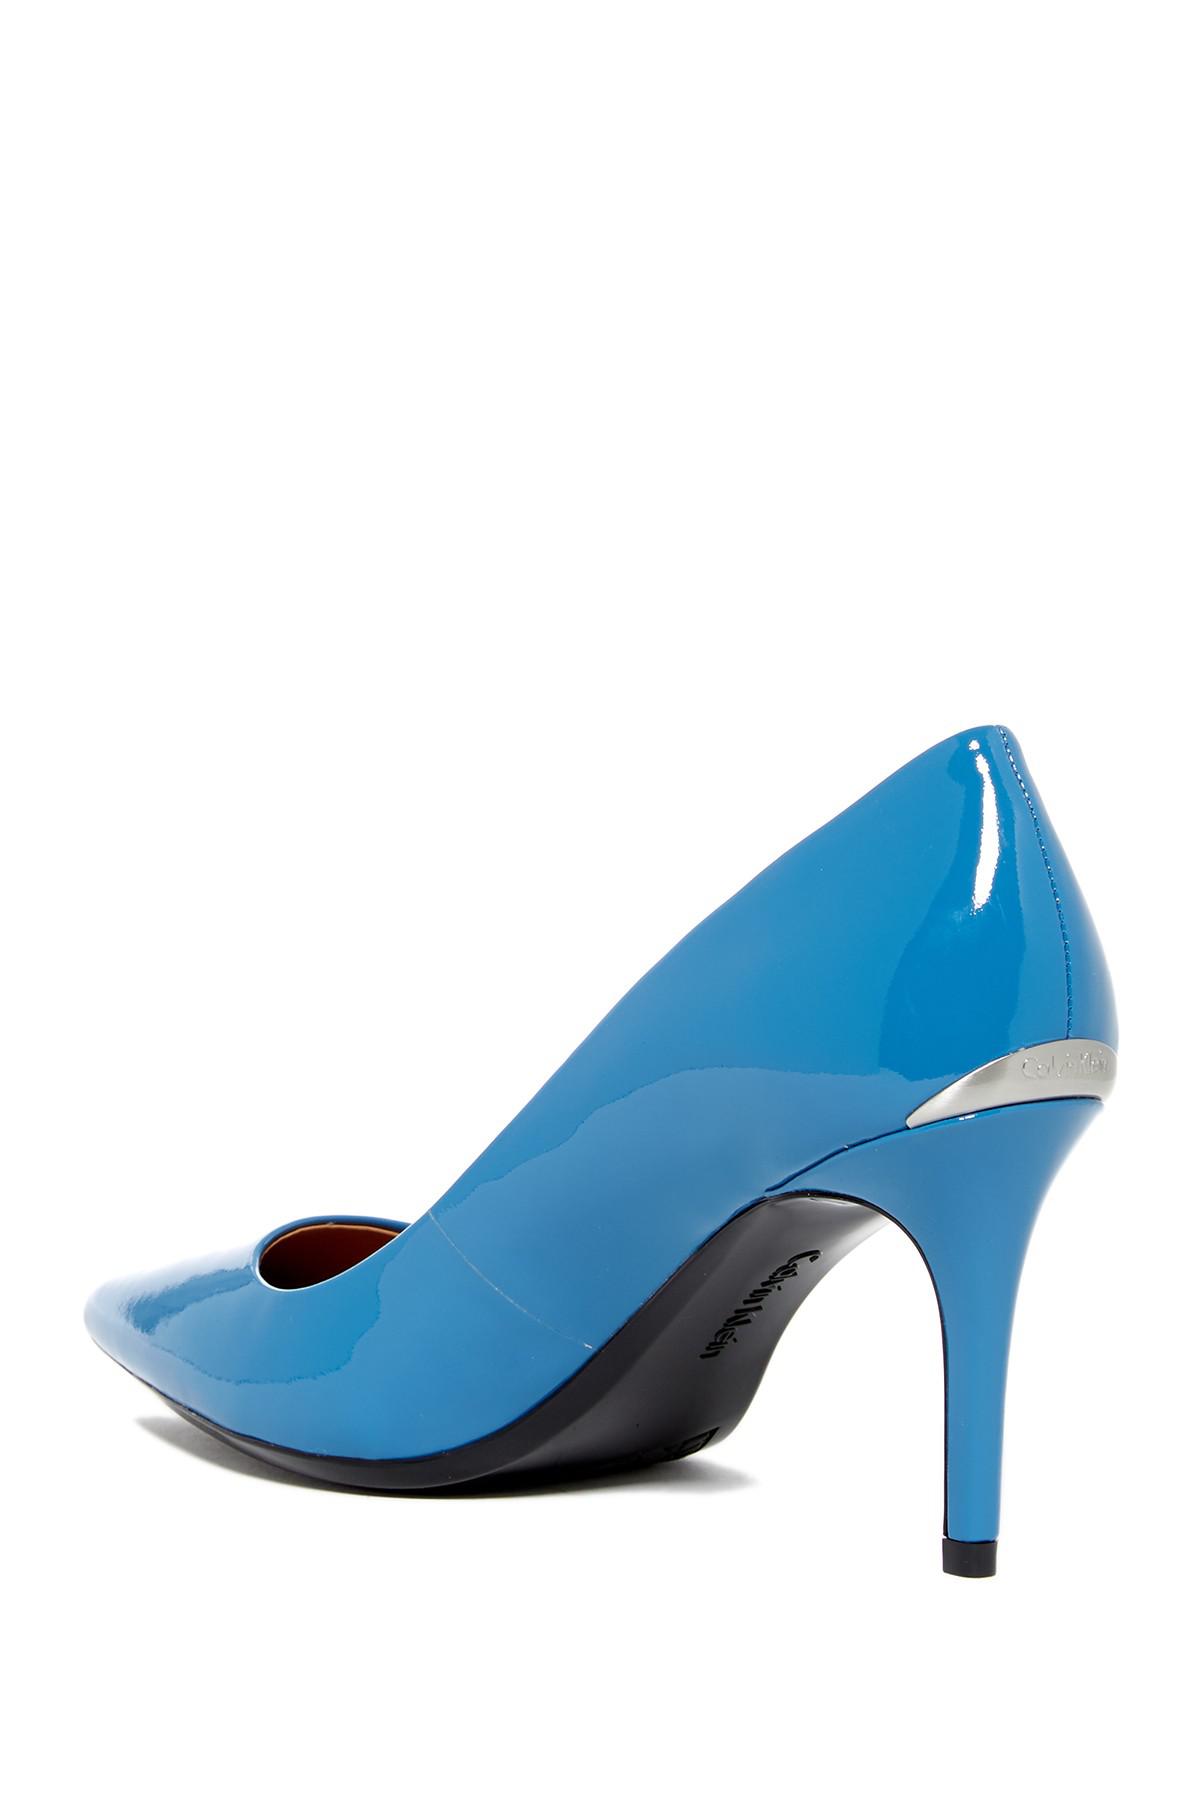 Descubrir 30+ imagen calvin klein blue heels - Thptnganamst.edu.vn